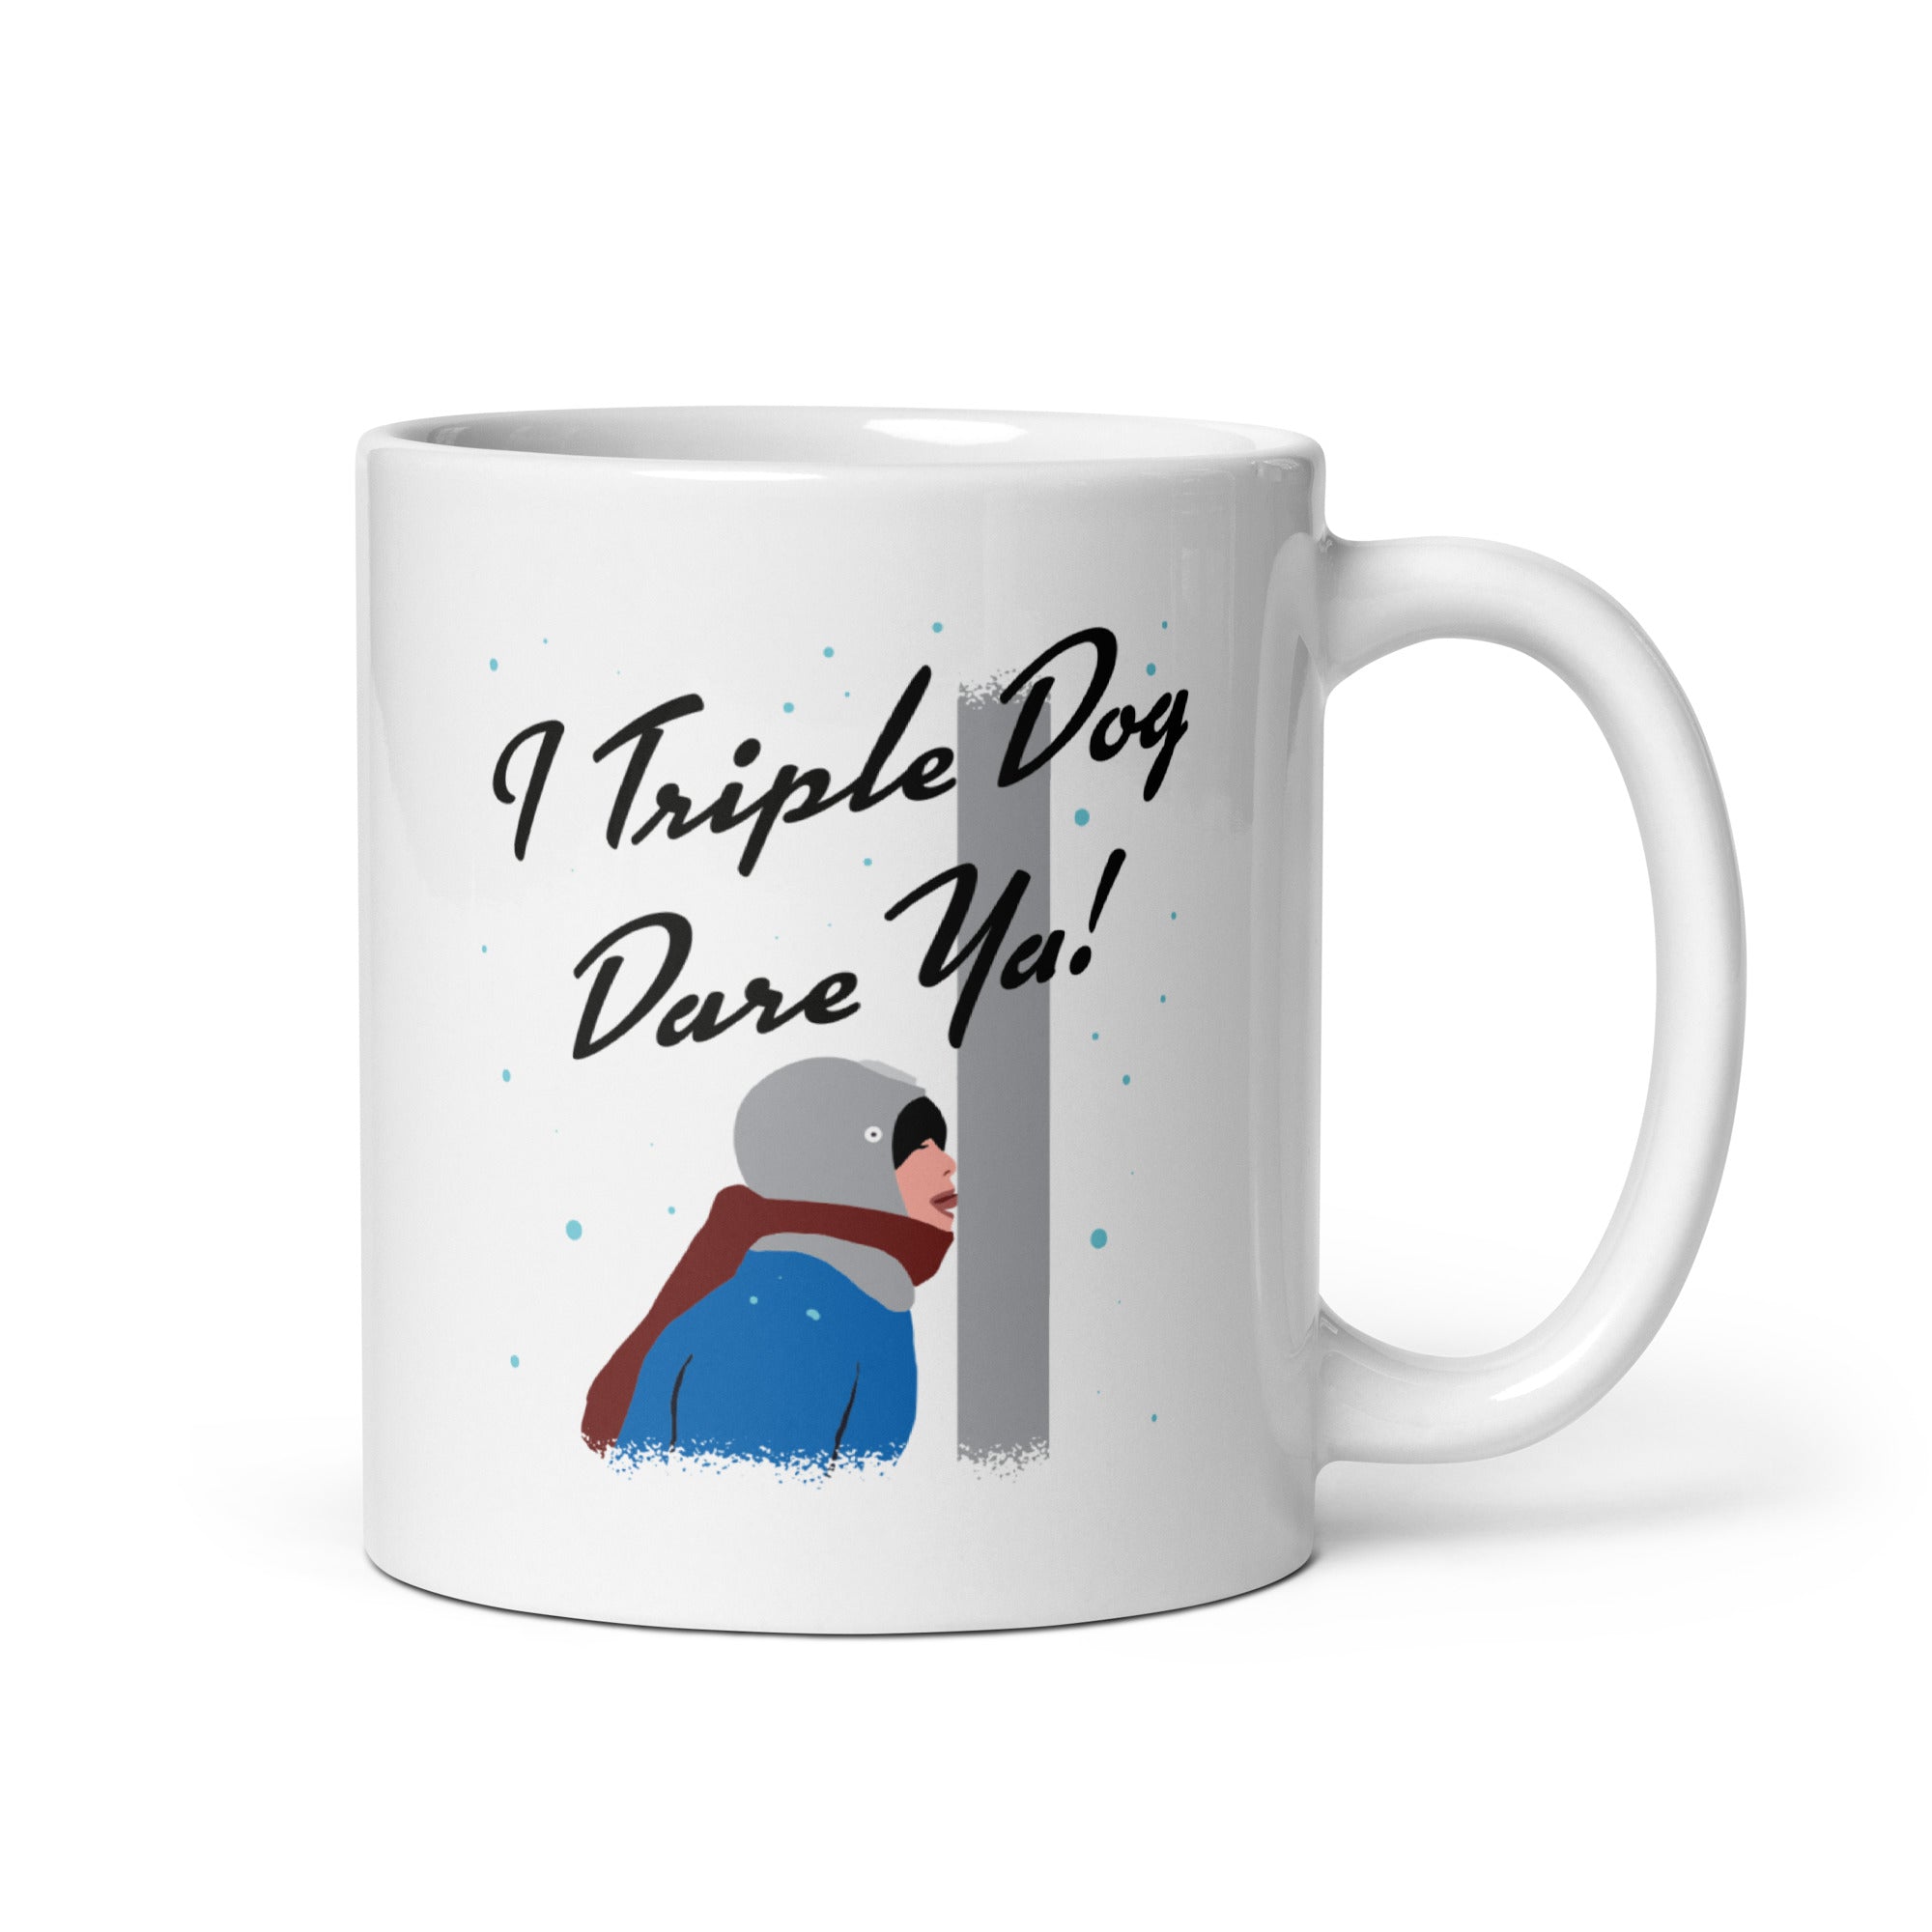 I Triple Dog Dare Ya! - 11oz Coffee Mug